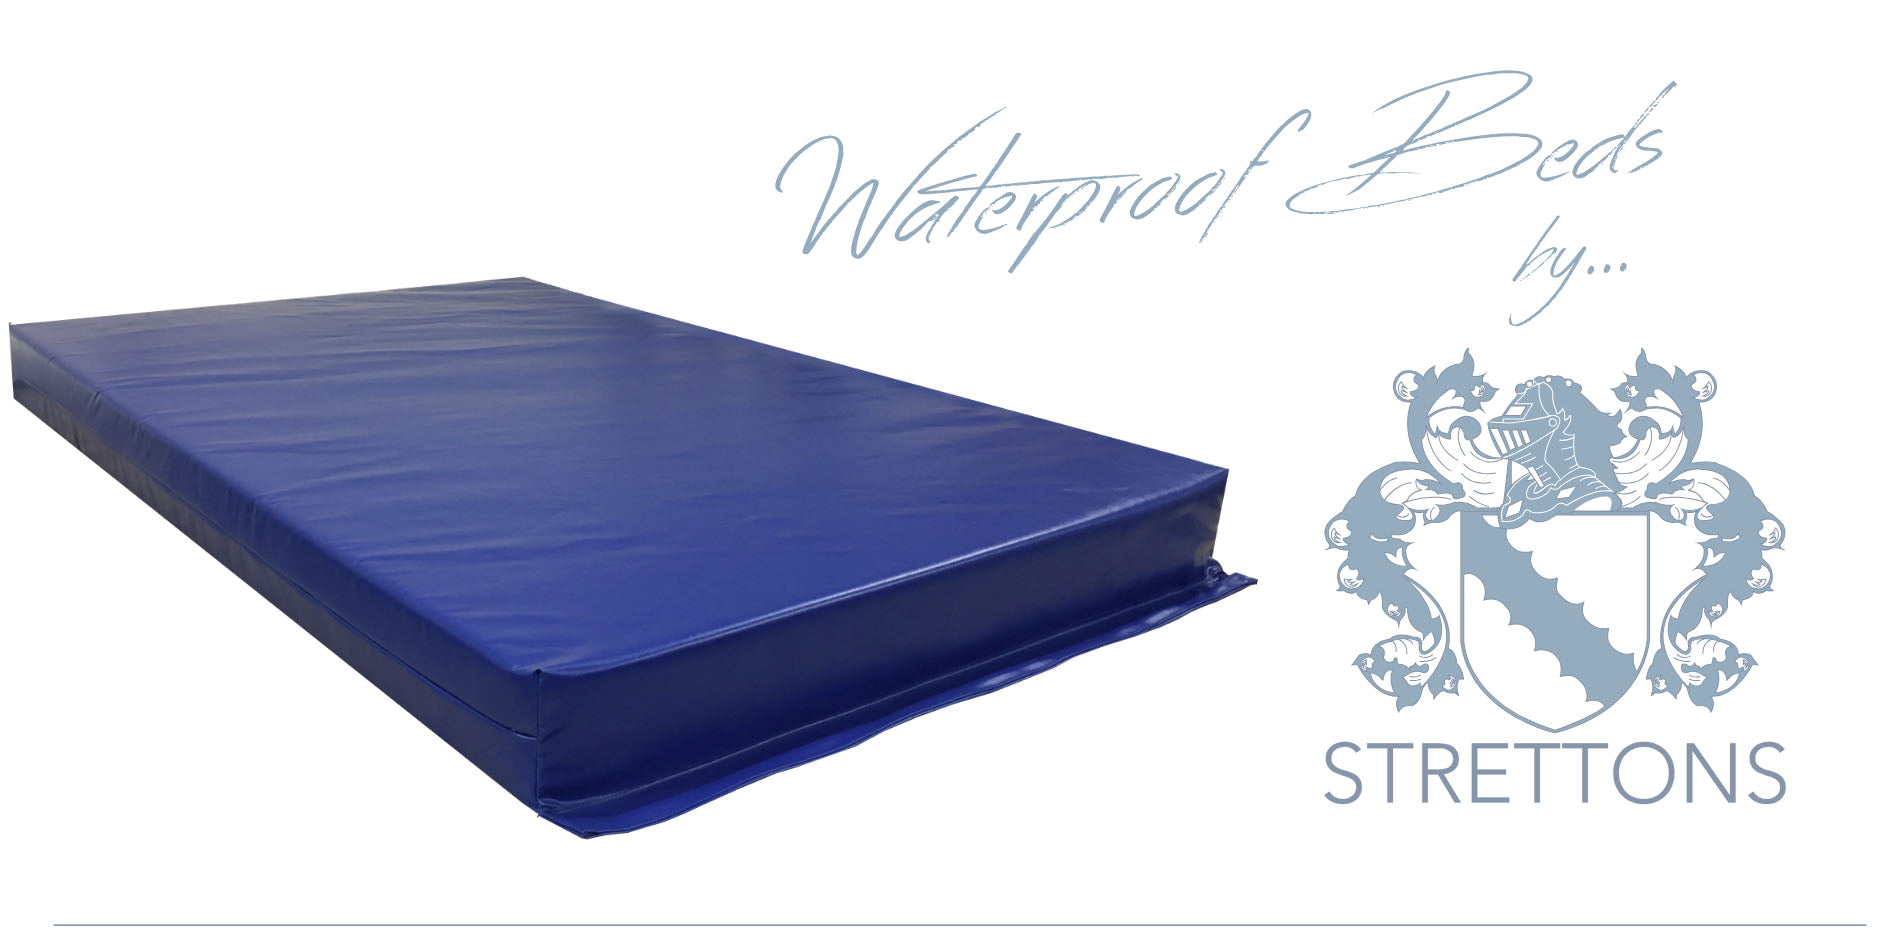 waterproof mattress blue 